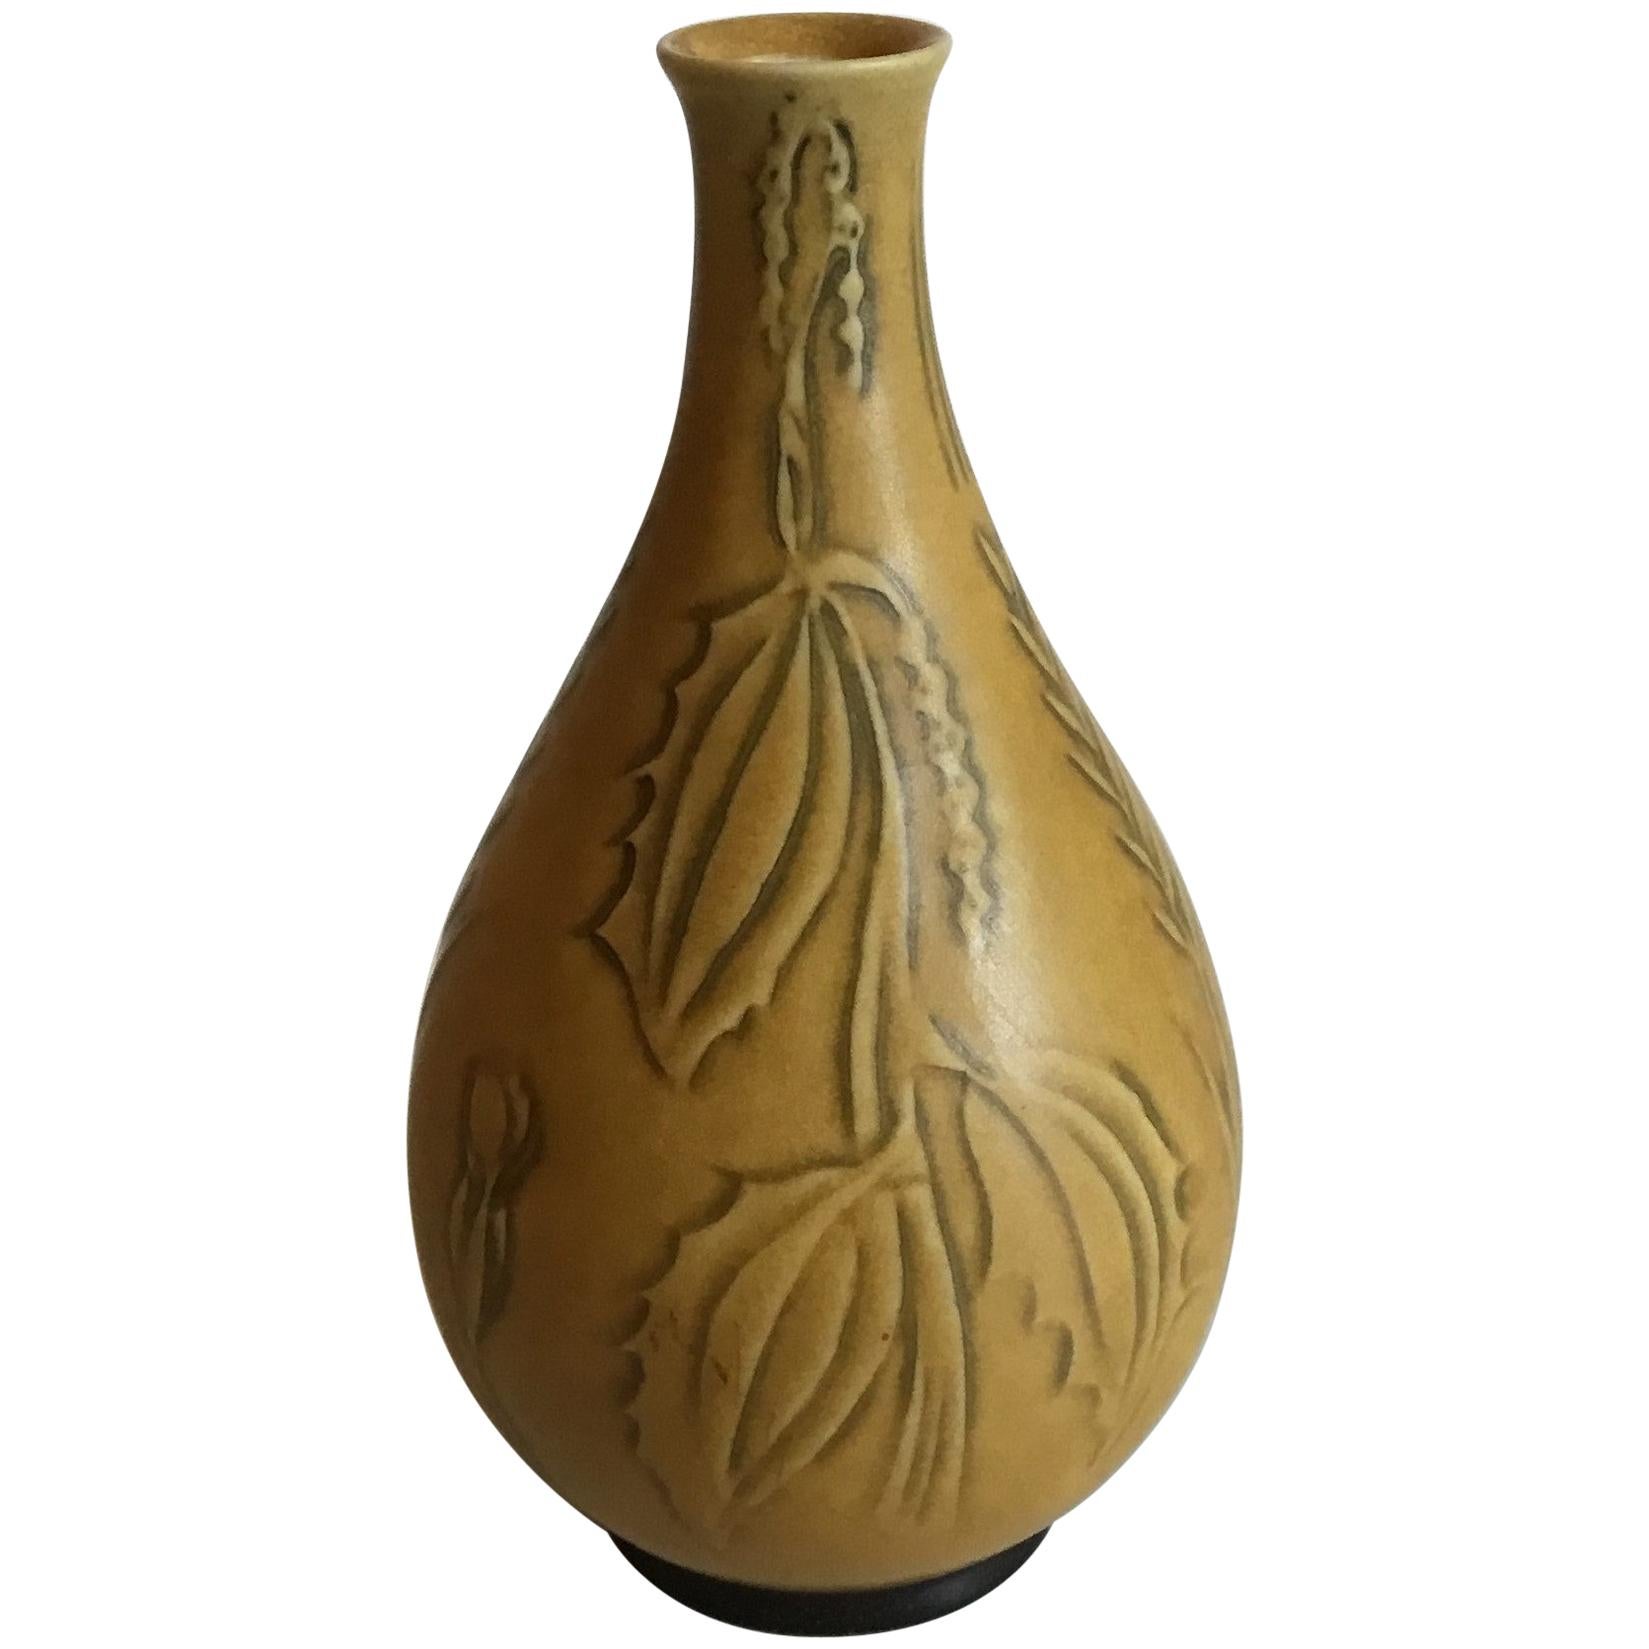 Bing & Grondahl Art Nouveau Stoneware Vase No 1059 by Cathinka Olsen For Sale